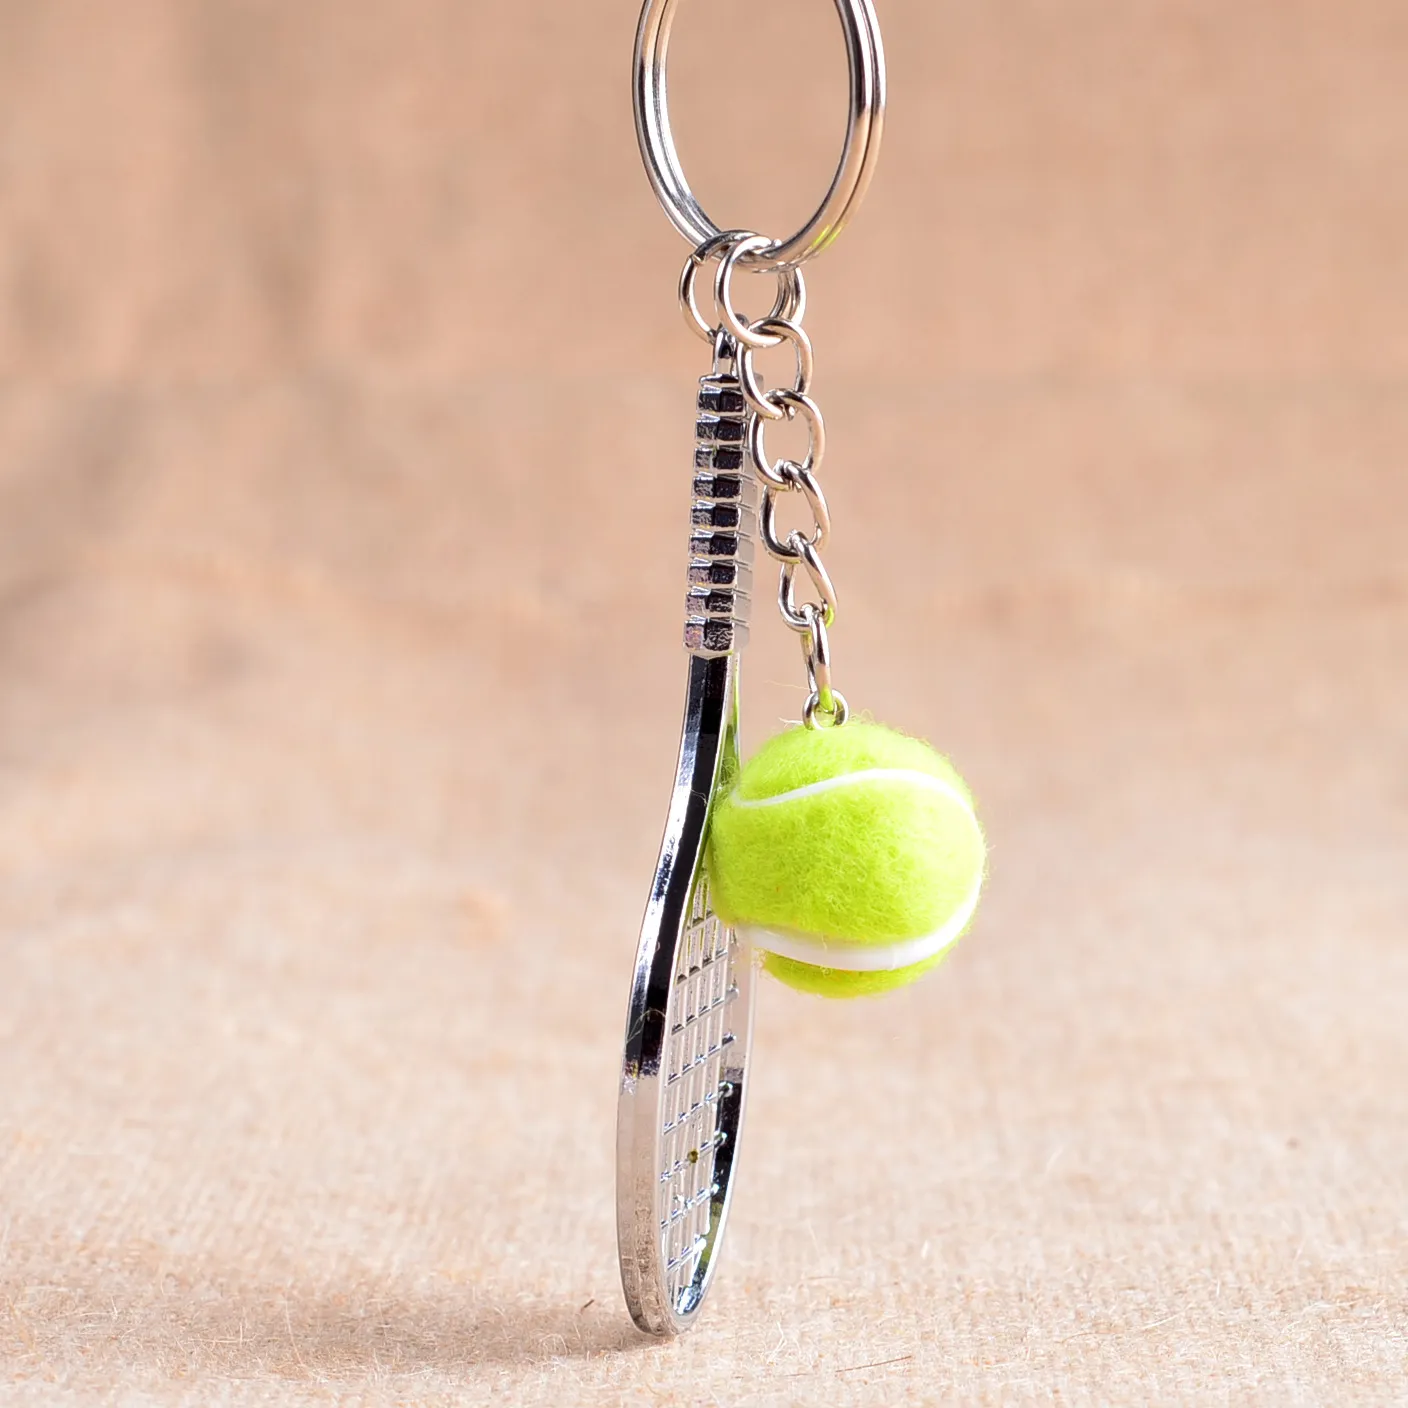 Hoge Kwaliteit Mini Tennisracket Sleutelhouder Metalen Mesh Racket Sleutel Houder kan worden aangepast Kr163 Sleutelhangers Mix Bestel 20 stuks veel